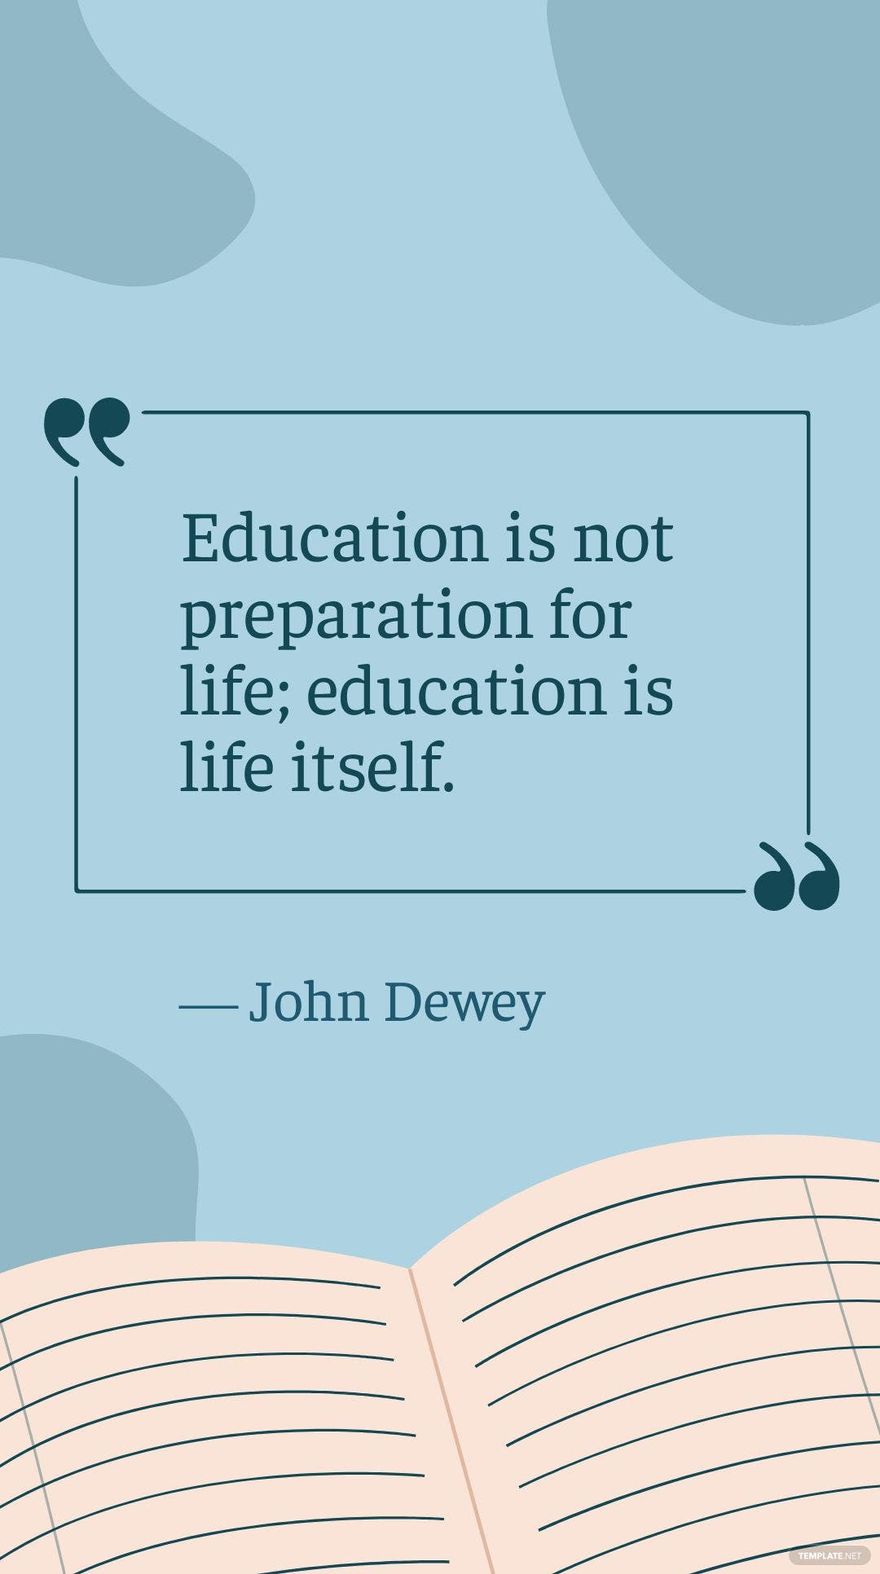 education is life itself